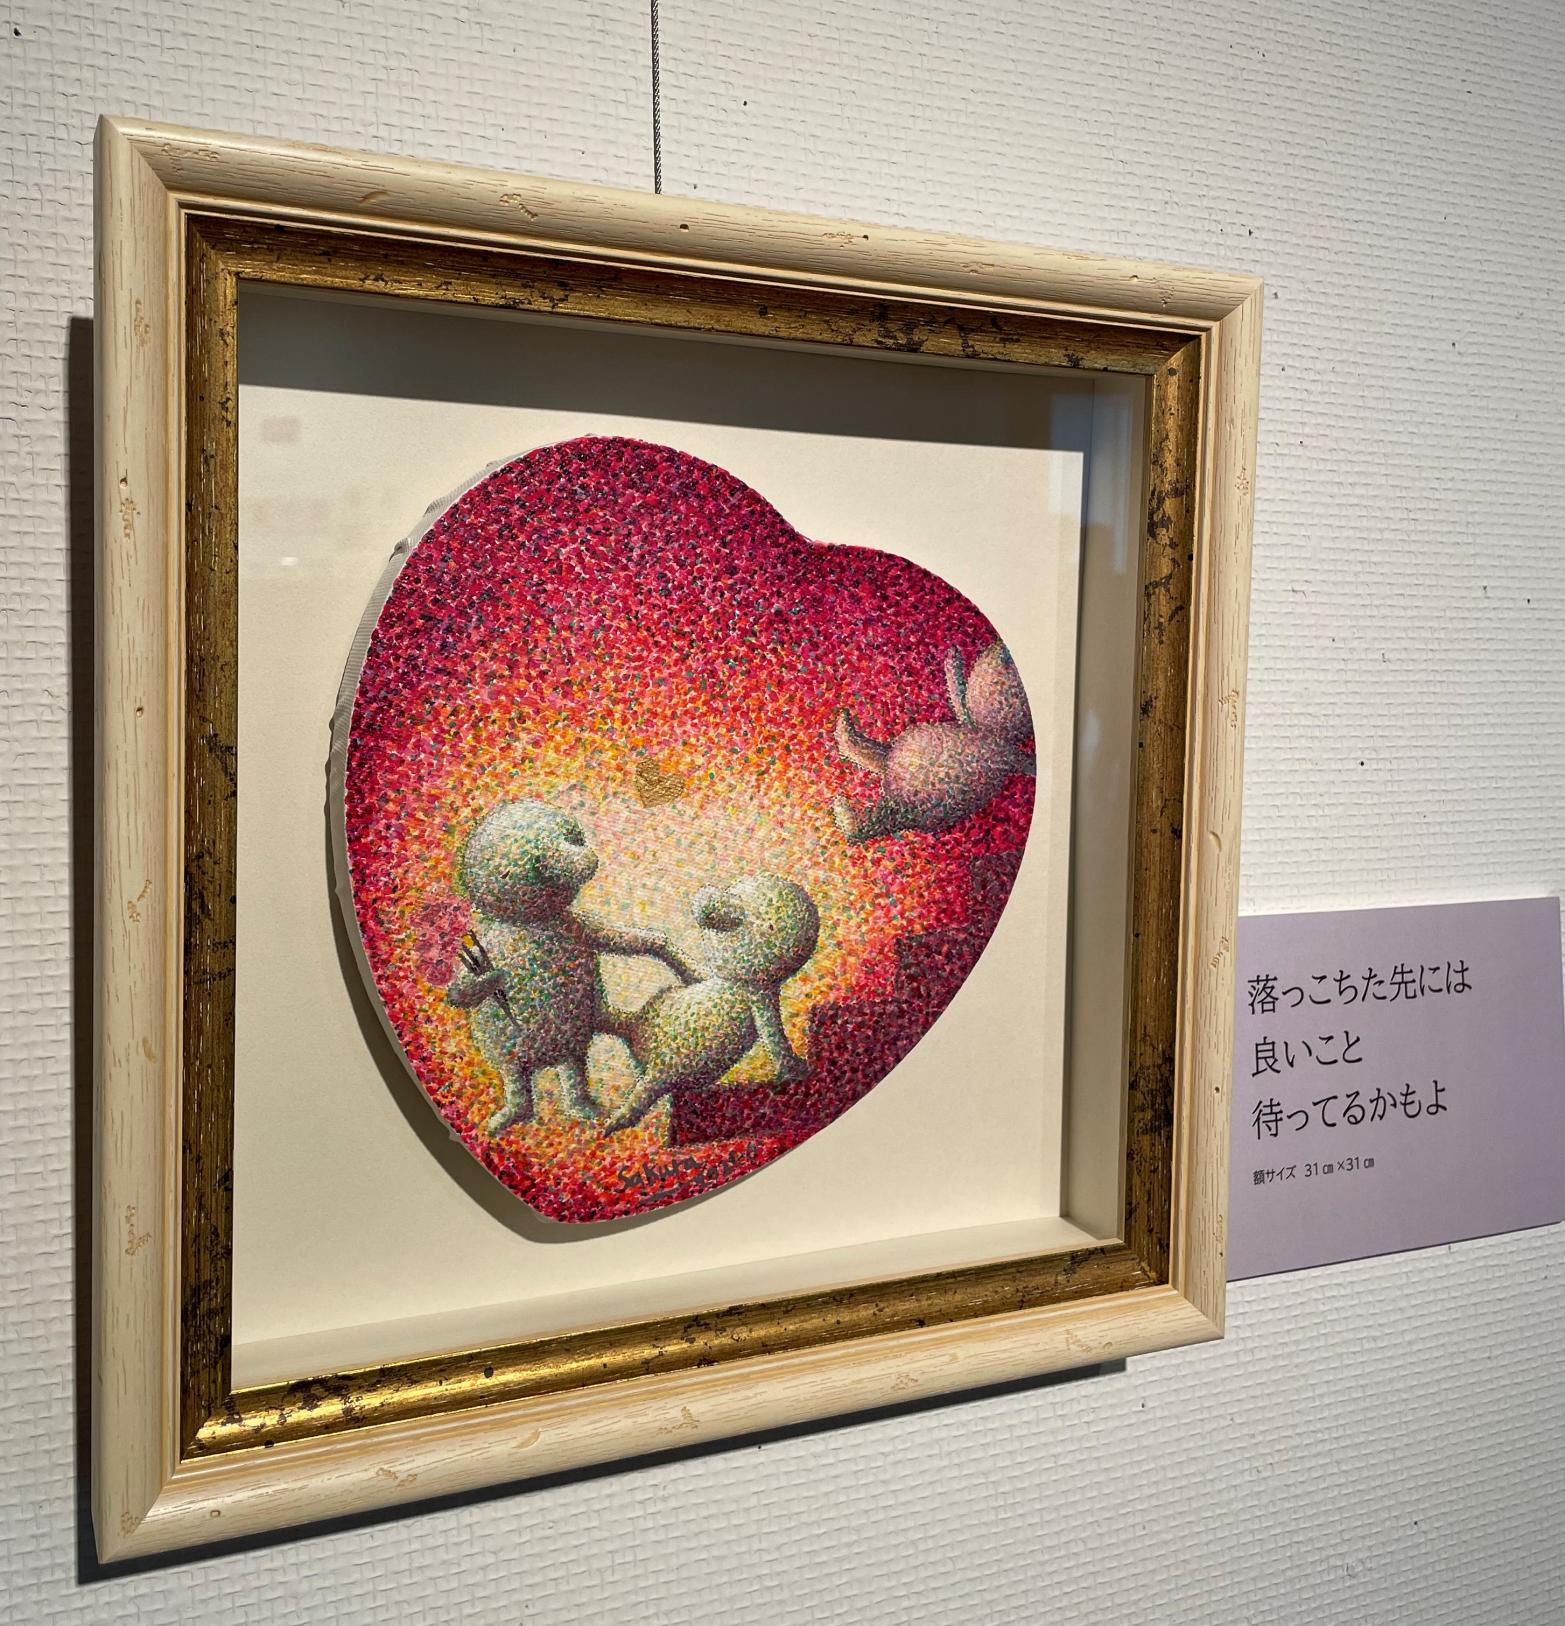 Sakura Isono Exhibition in Ibarakiー会期終了ー